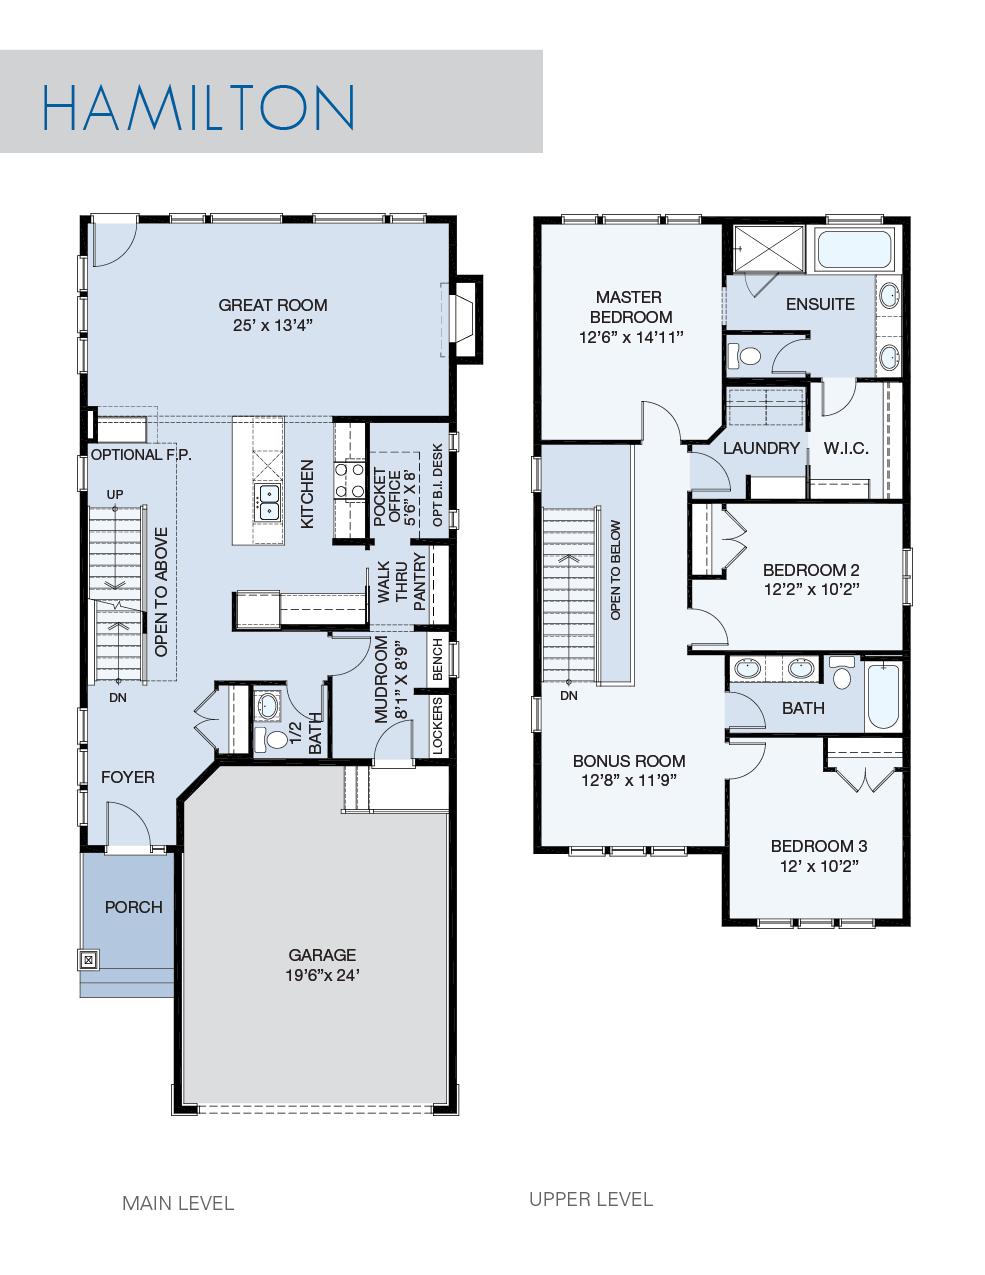 Hamilton Home Model Floor Plan